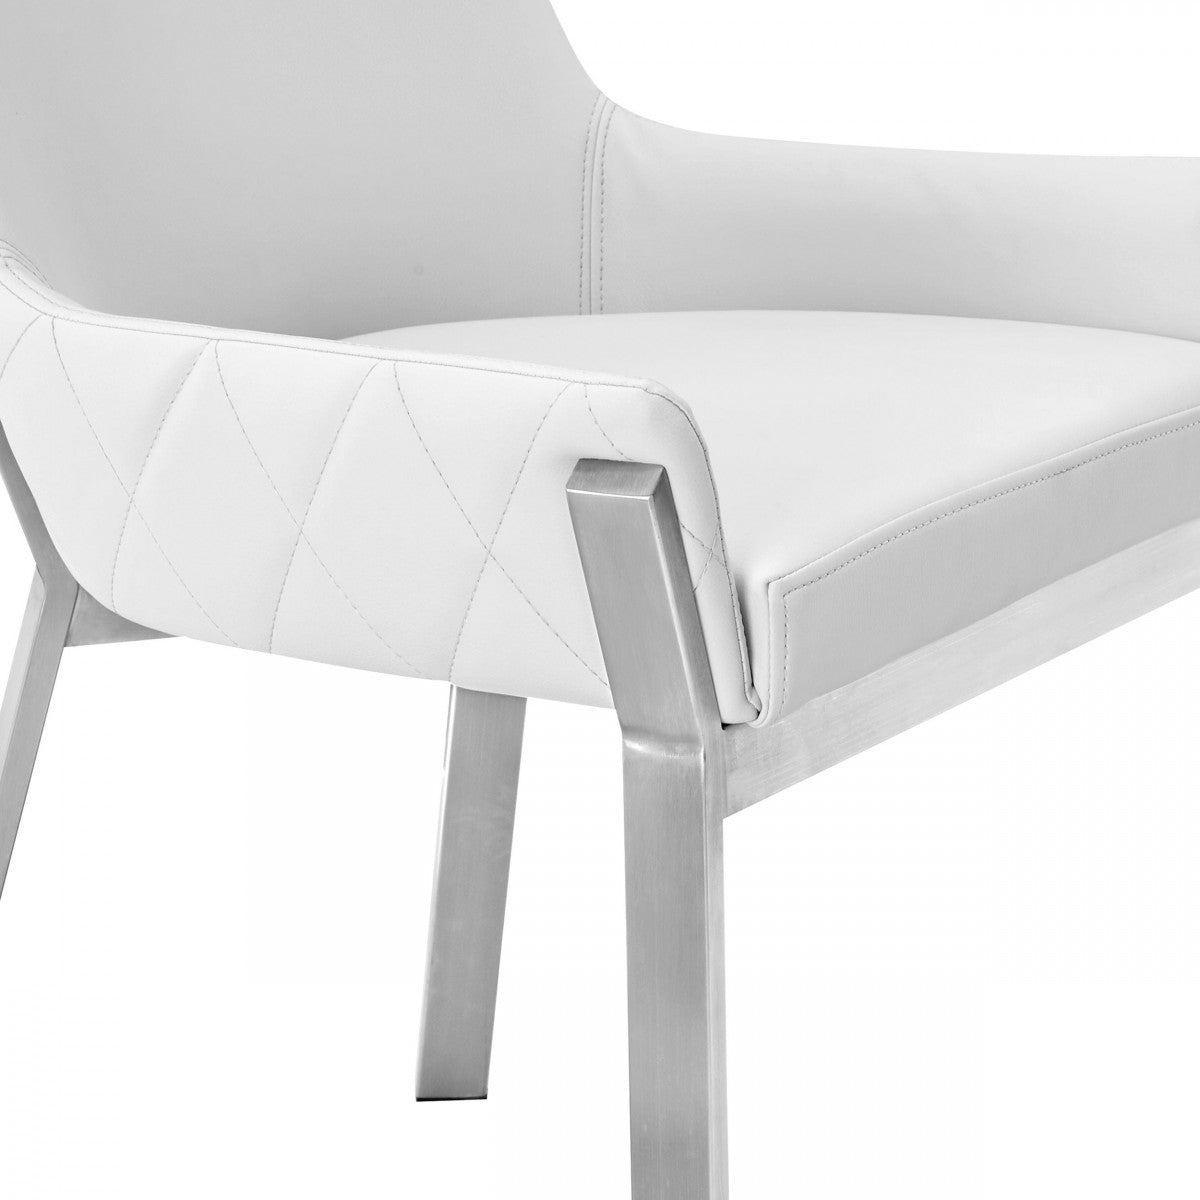 Modrest Ganon Modern White & Brushed Stainless Steel Dining Chair